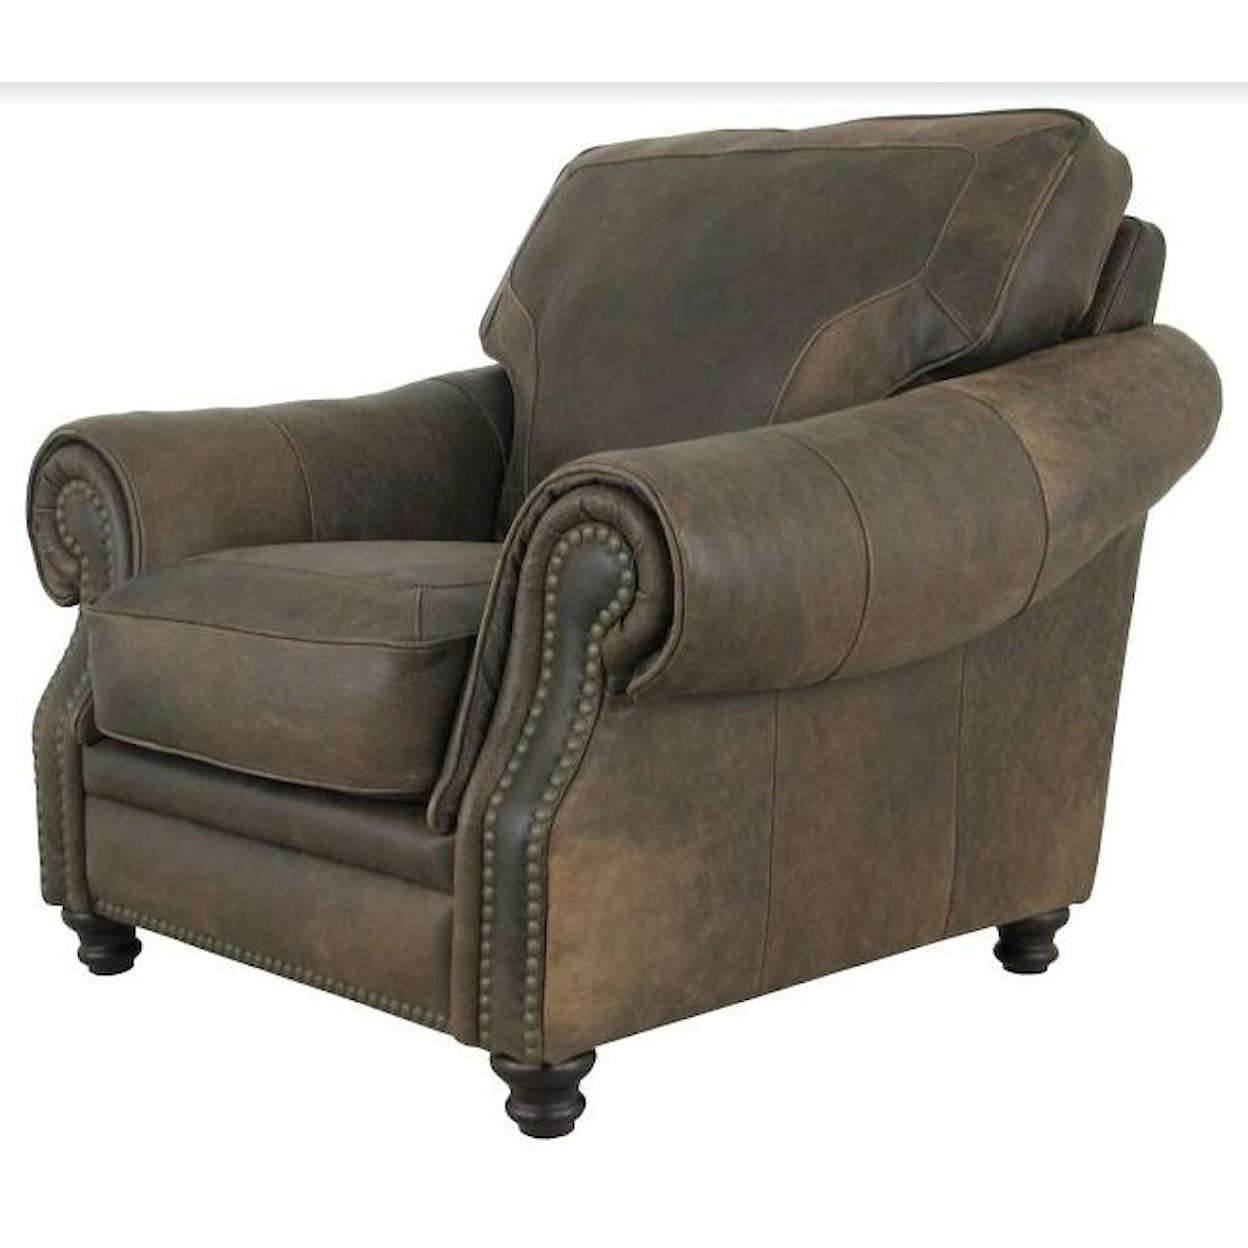 Virginia Furniture Market Premium Leather Tuscany Chair